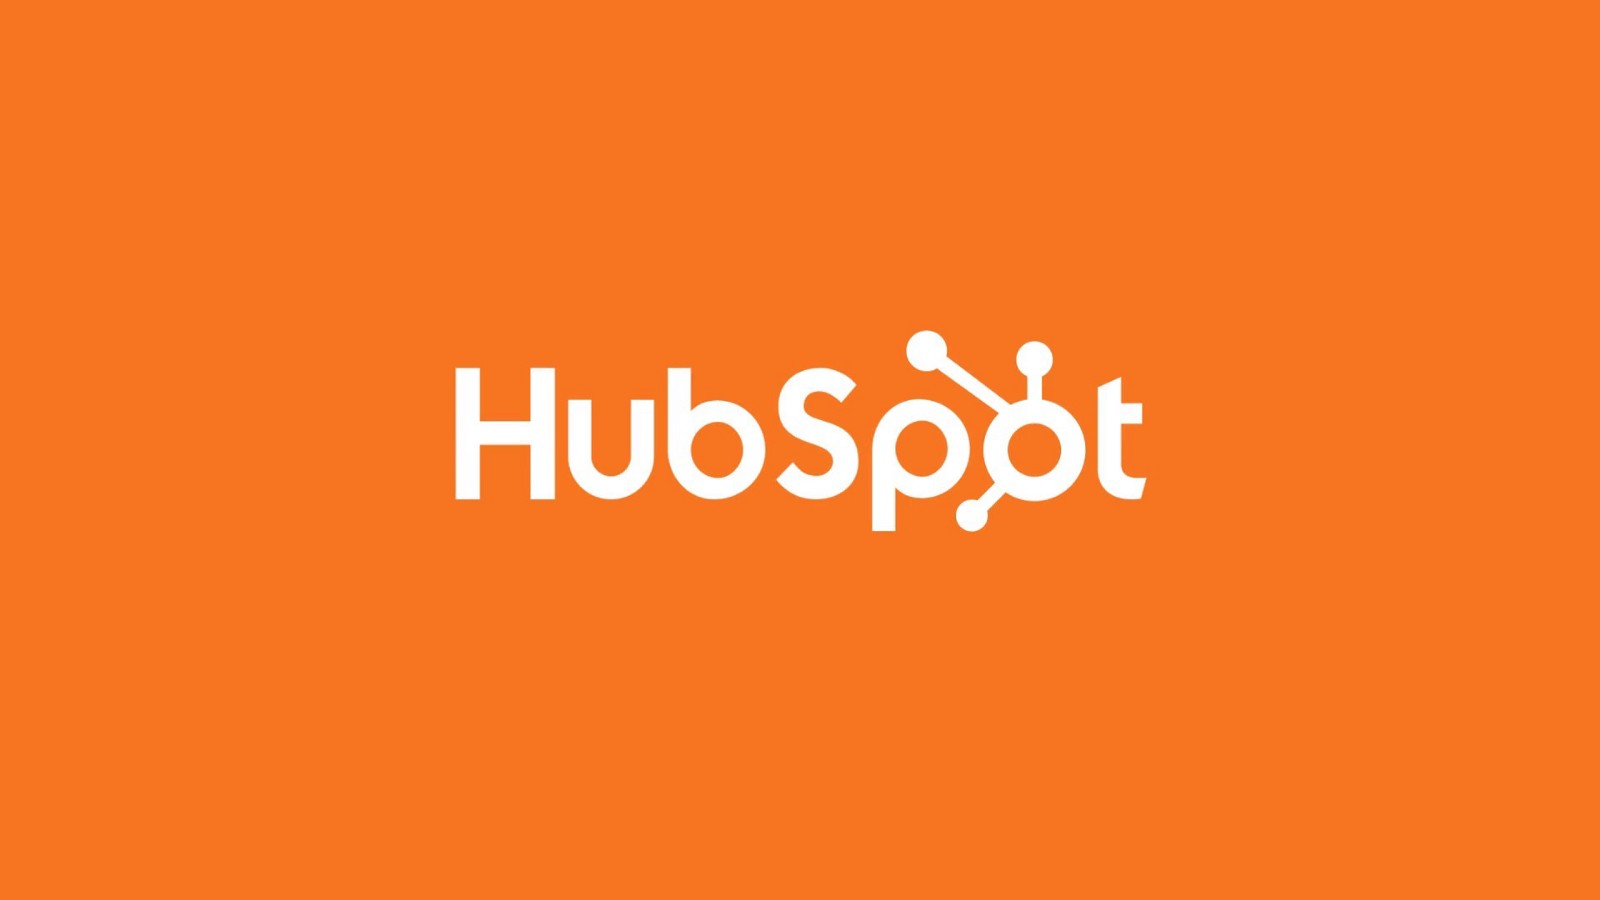 Hubspot announces senior appointment